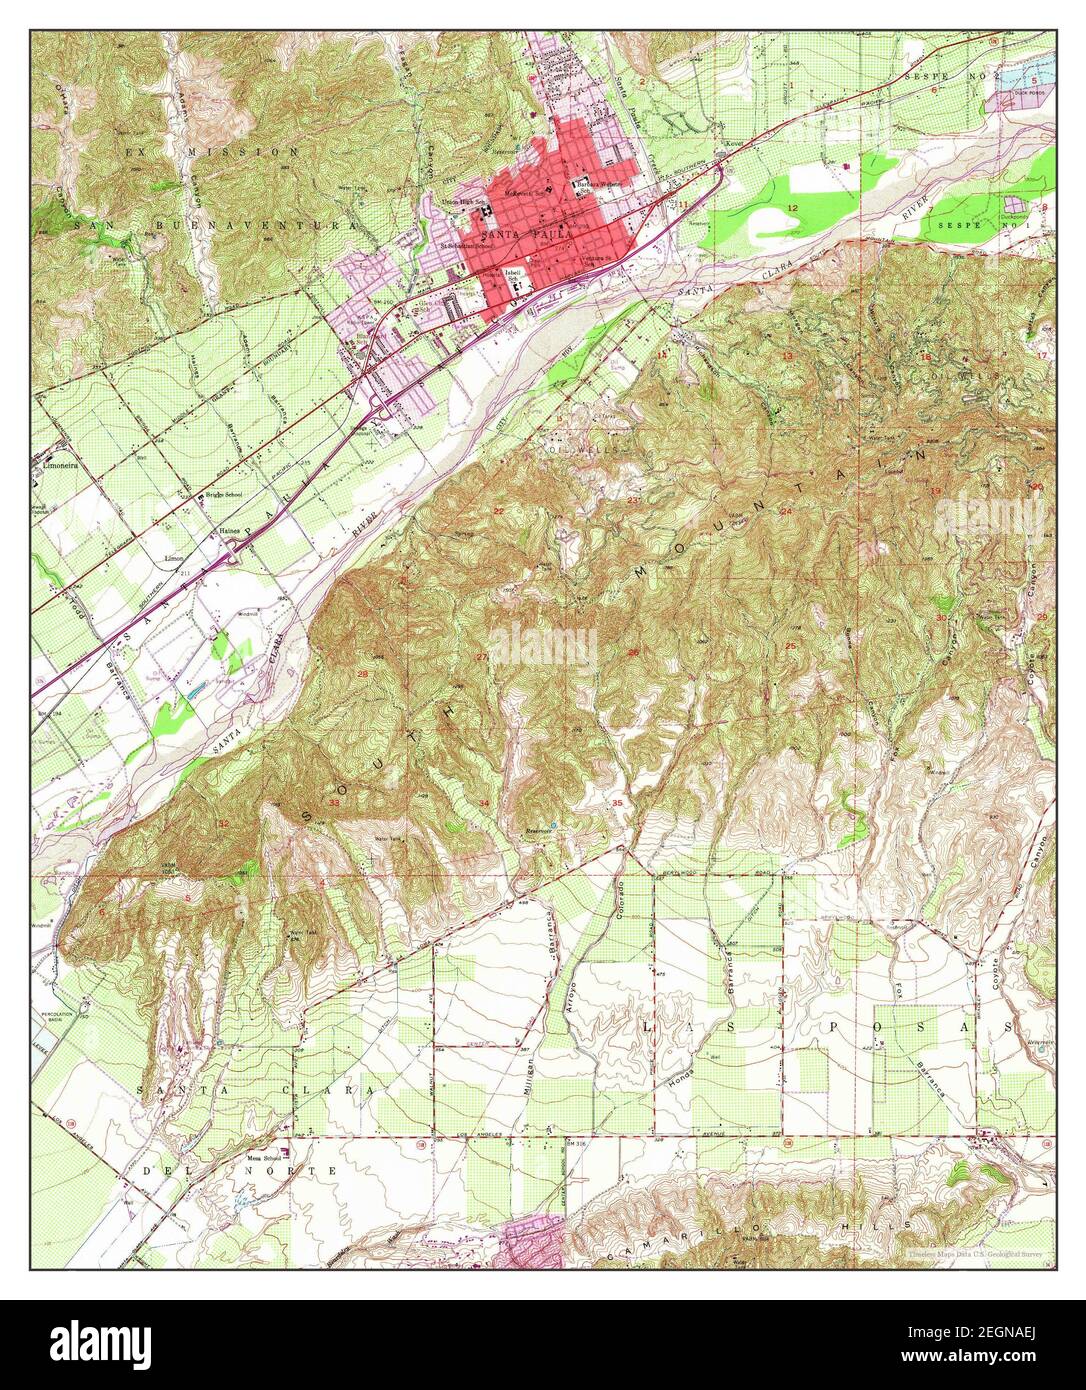 Santa Paula, California, map 1951, 1:24000, United States of America by Timeless Maps, data U.S. Geological Survey Stock Photo